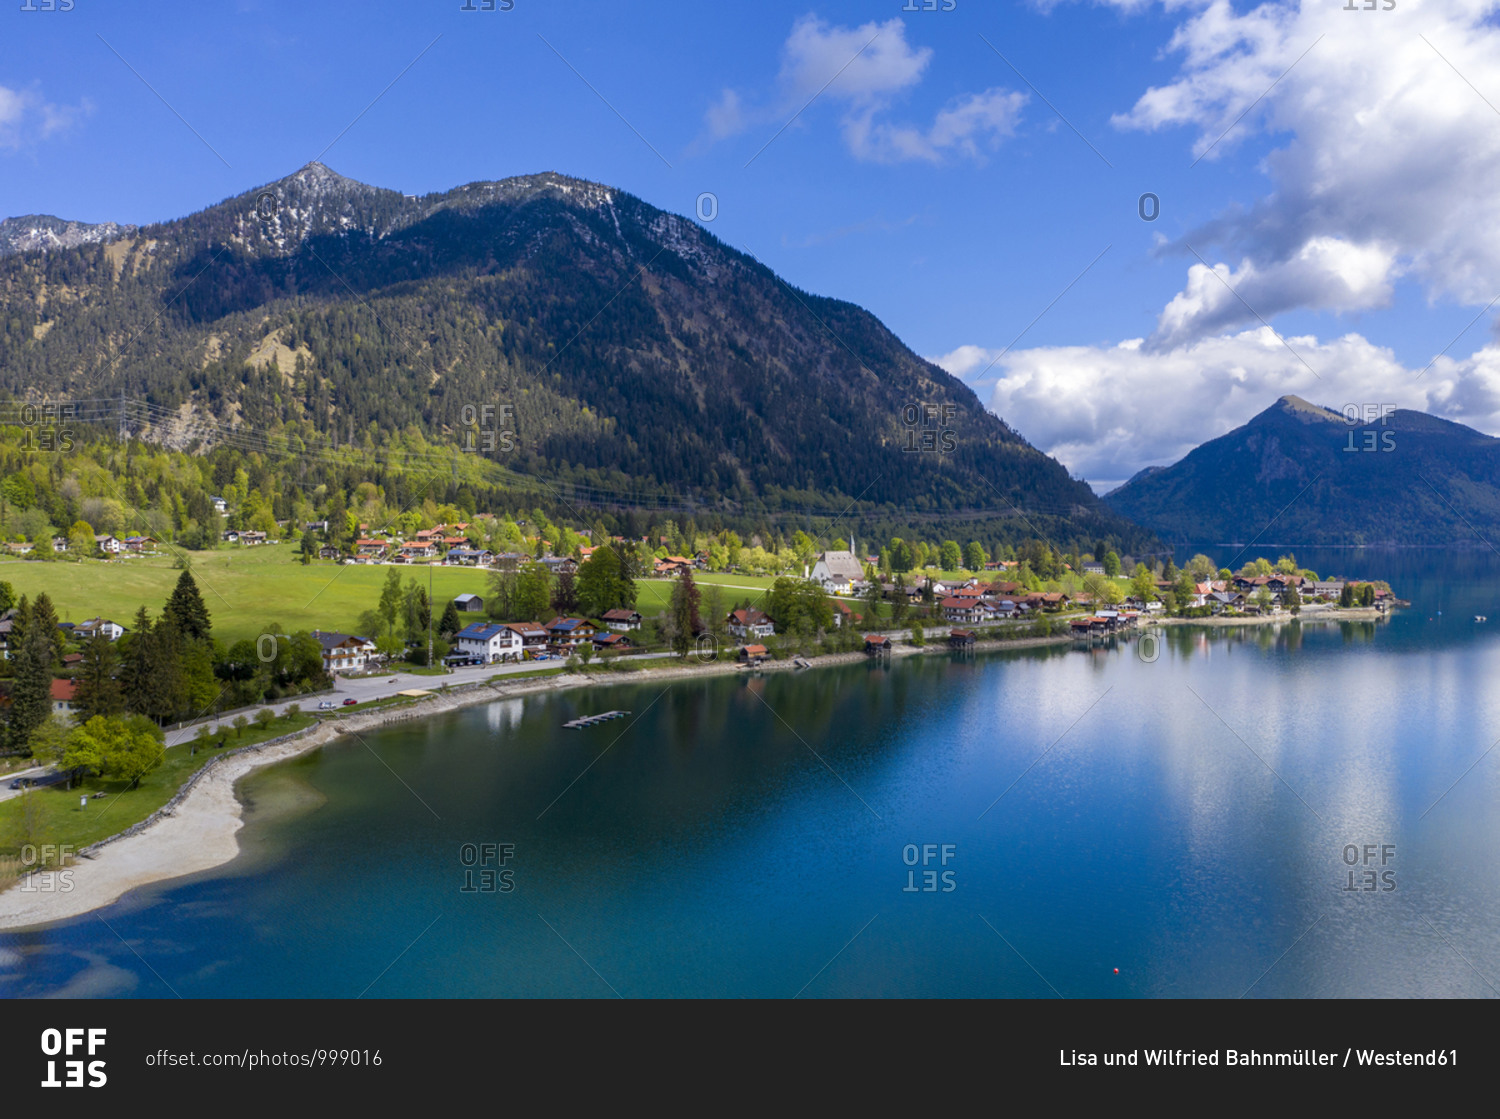 Germany- Bavaria- Kochel- Village on shore of Lake Walchen with Herzogstand mountain in background